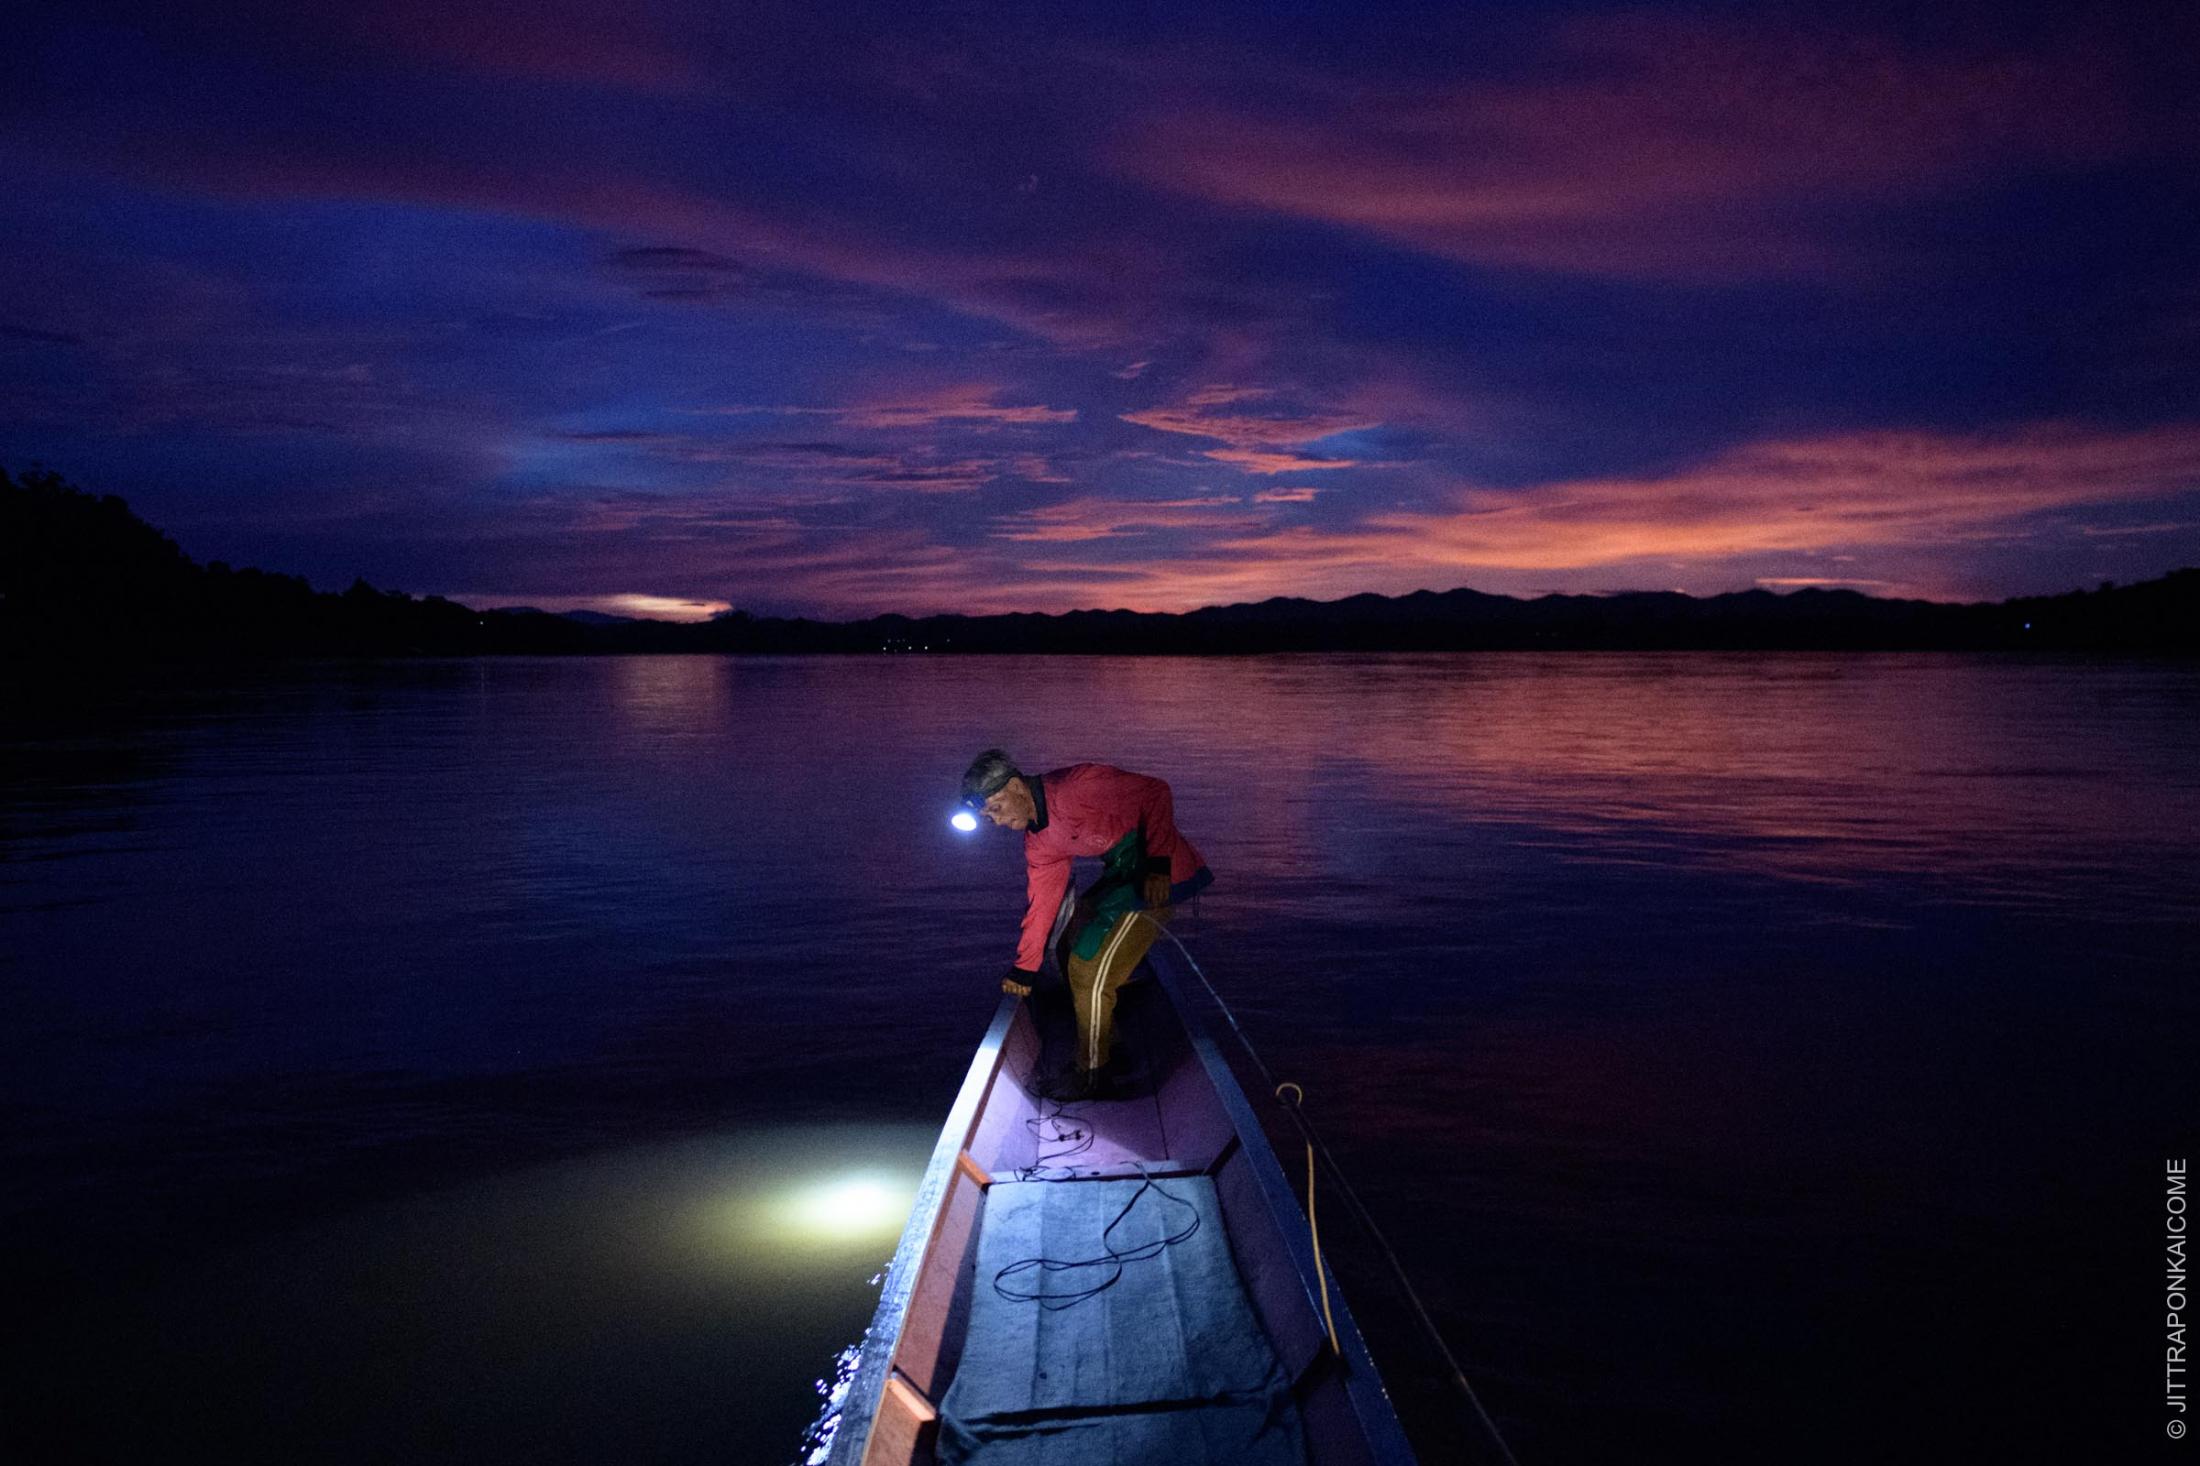 Mekong in Peril - At dusk, a fisherman checks his net. Chiang Khan is close...